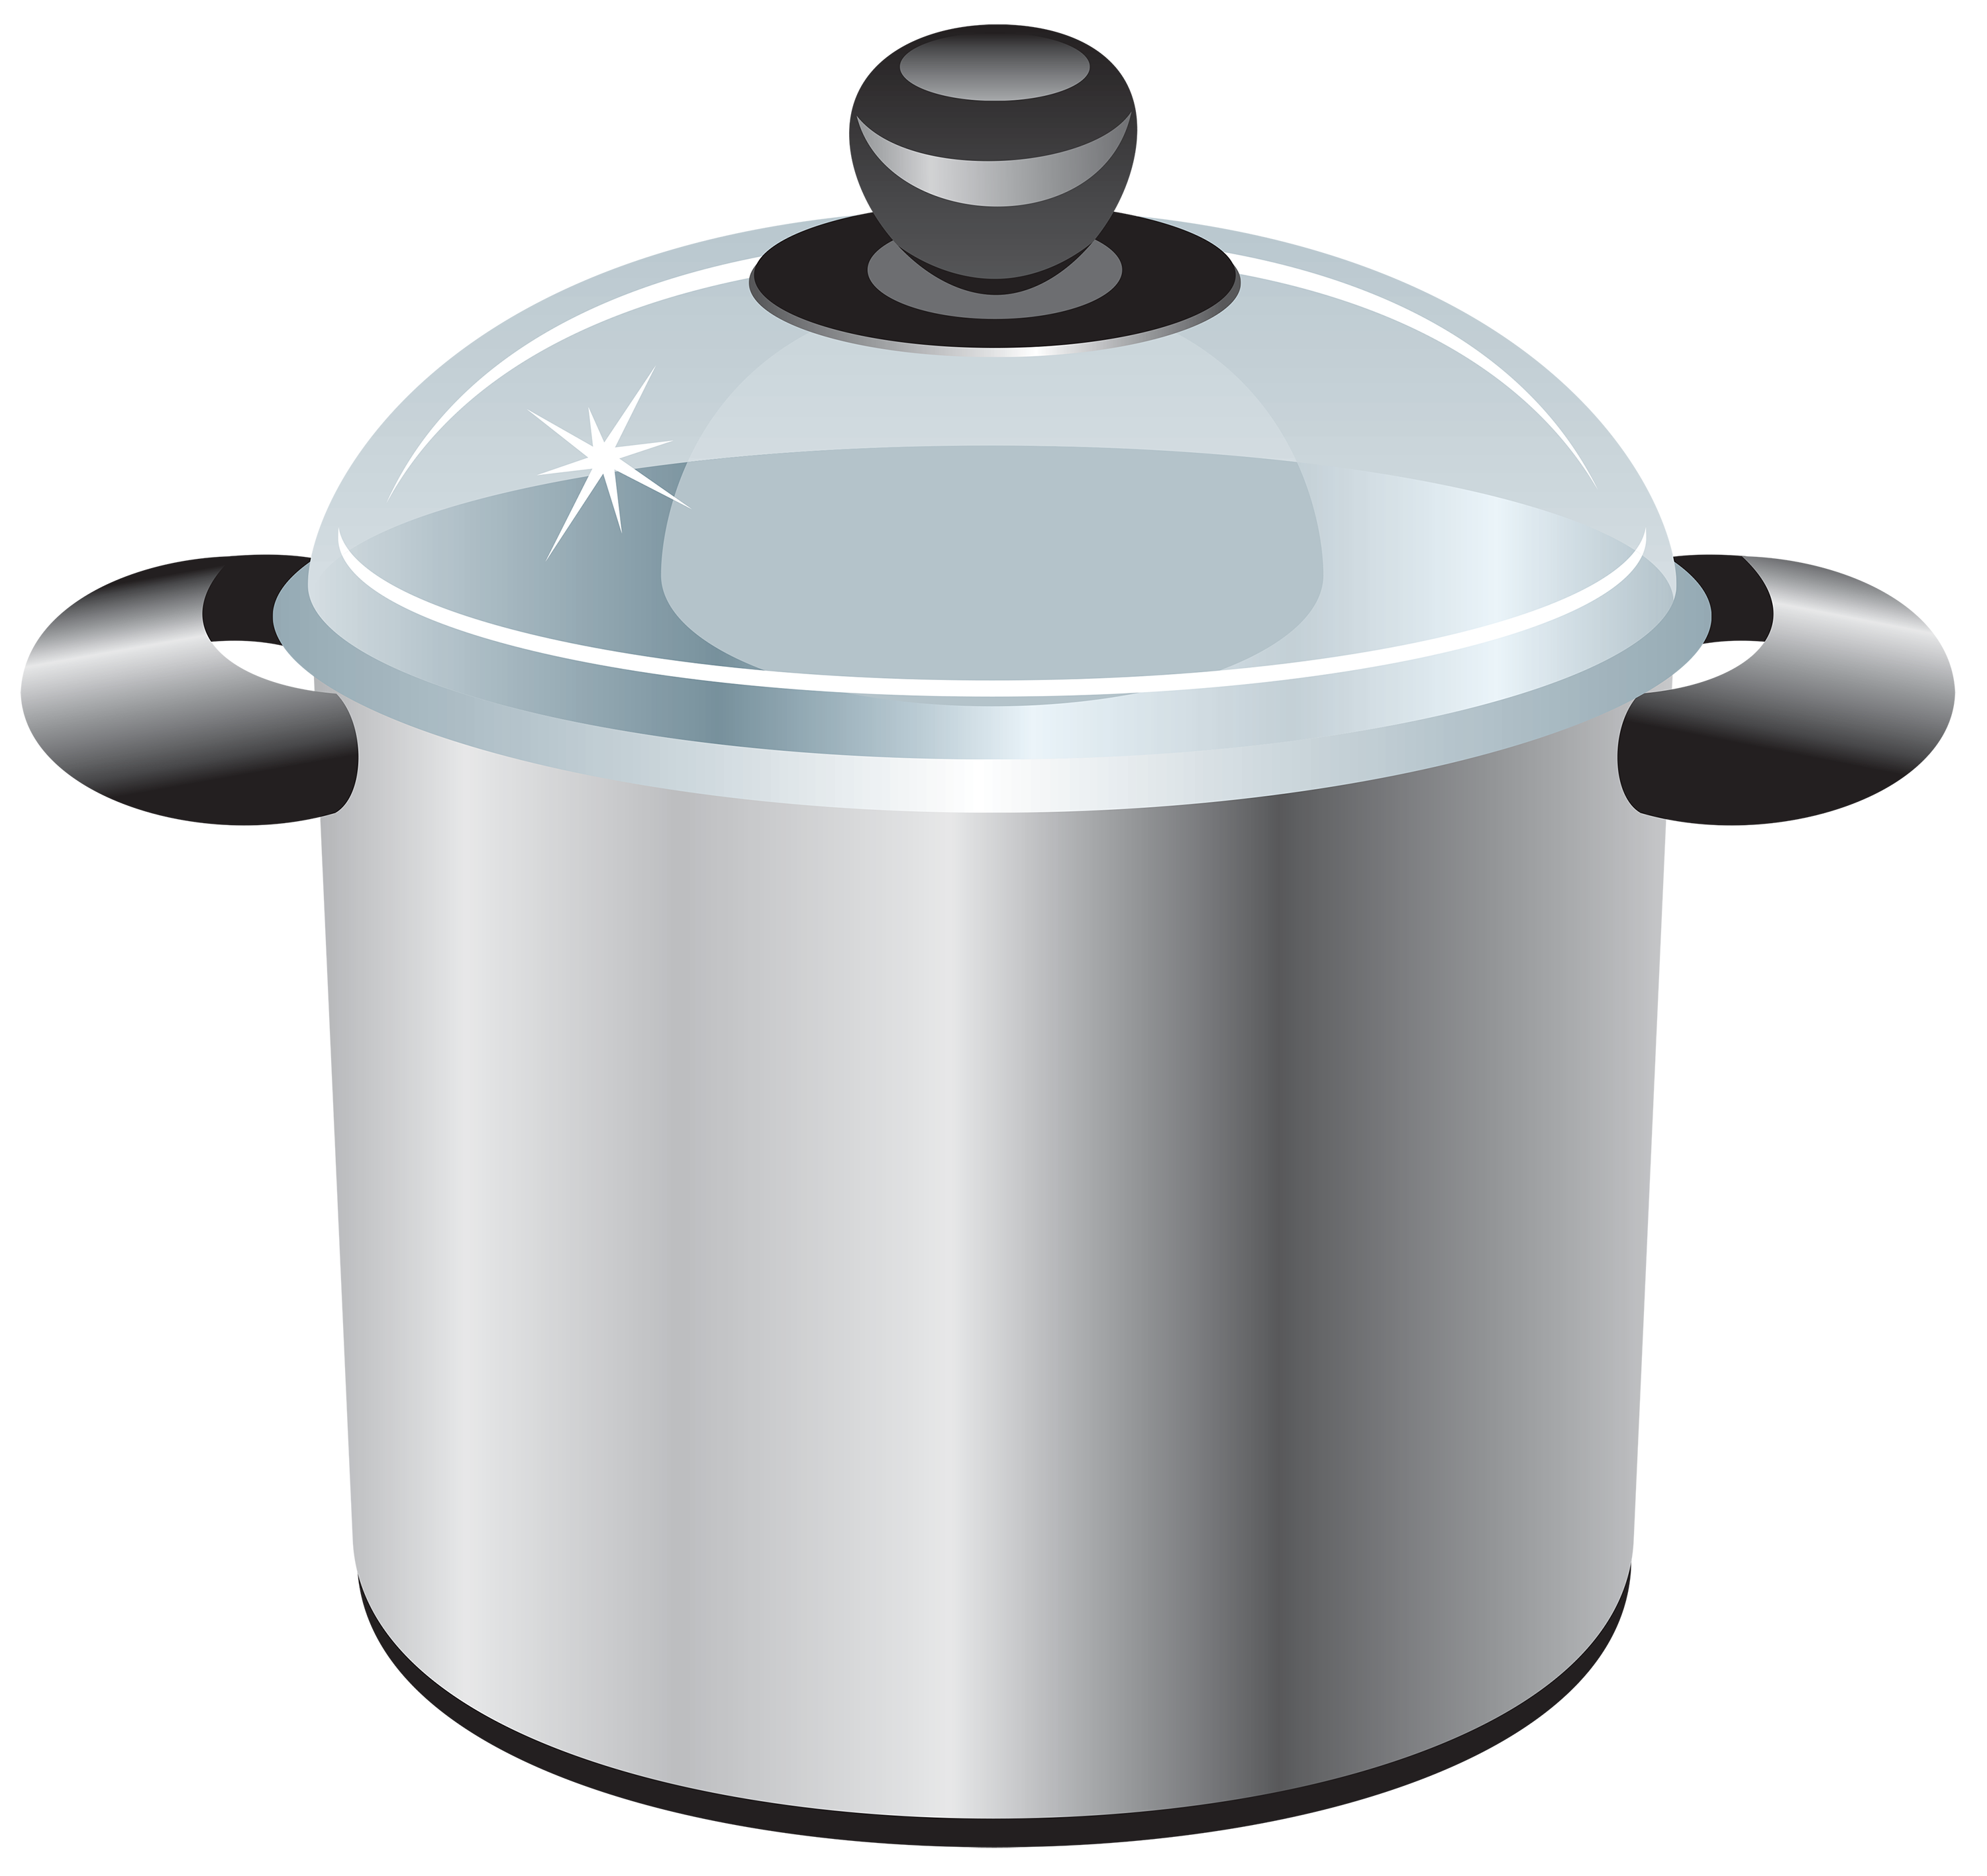 Silver Cooking Pot Clipart - Best WEB Clipart